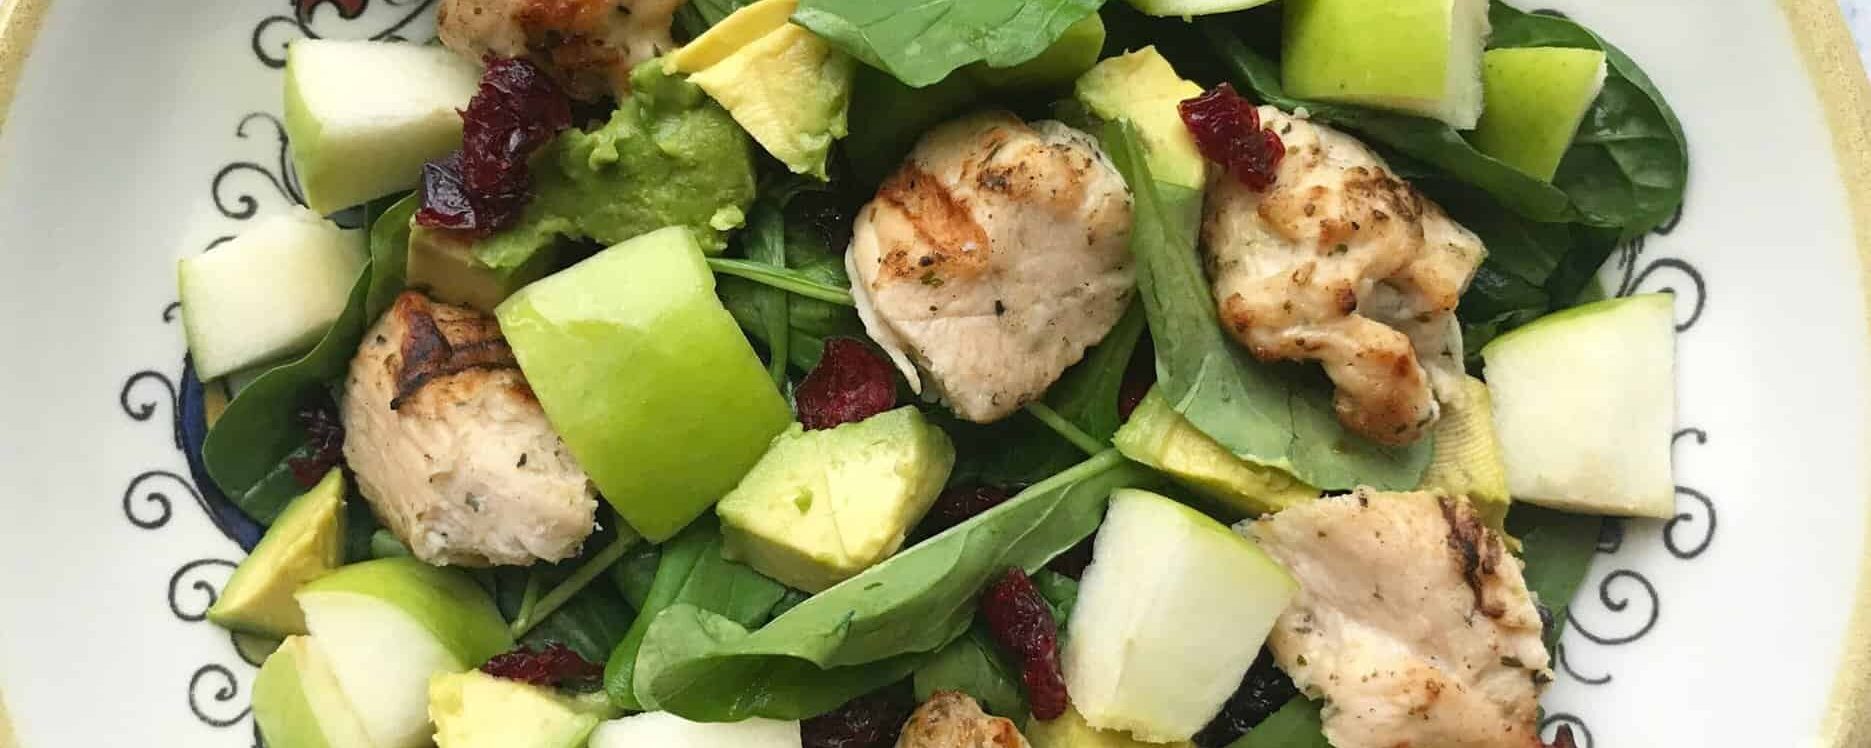 SimplyRecipes.com: “Un-Cobb Salad” – Chicken Avocado Salad with Green Apple and Dried Cranberries